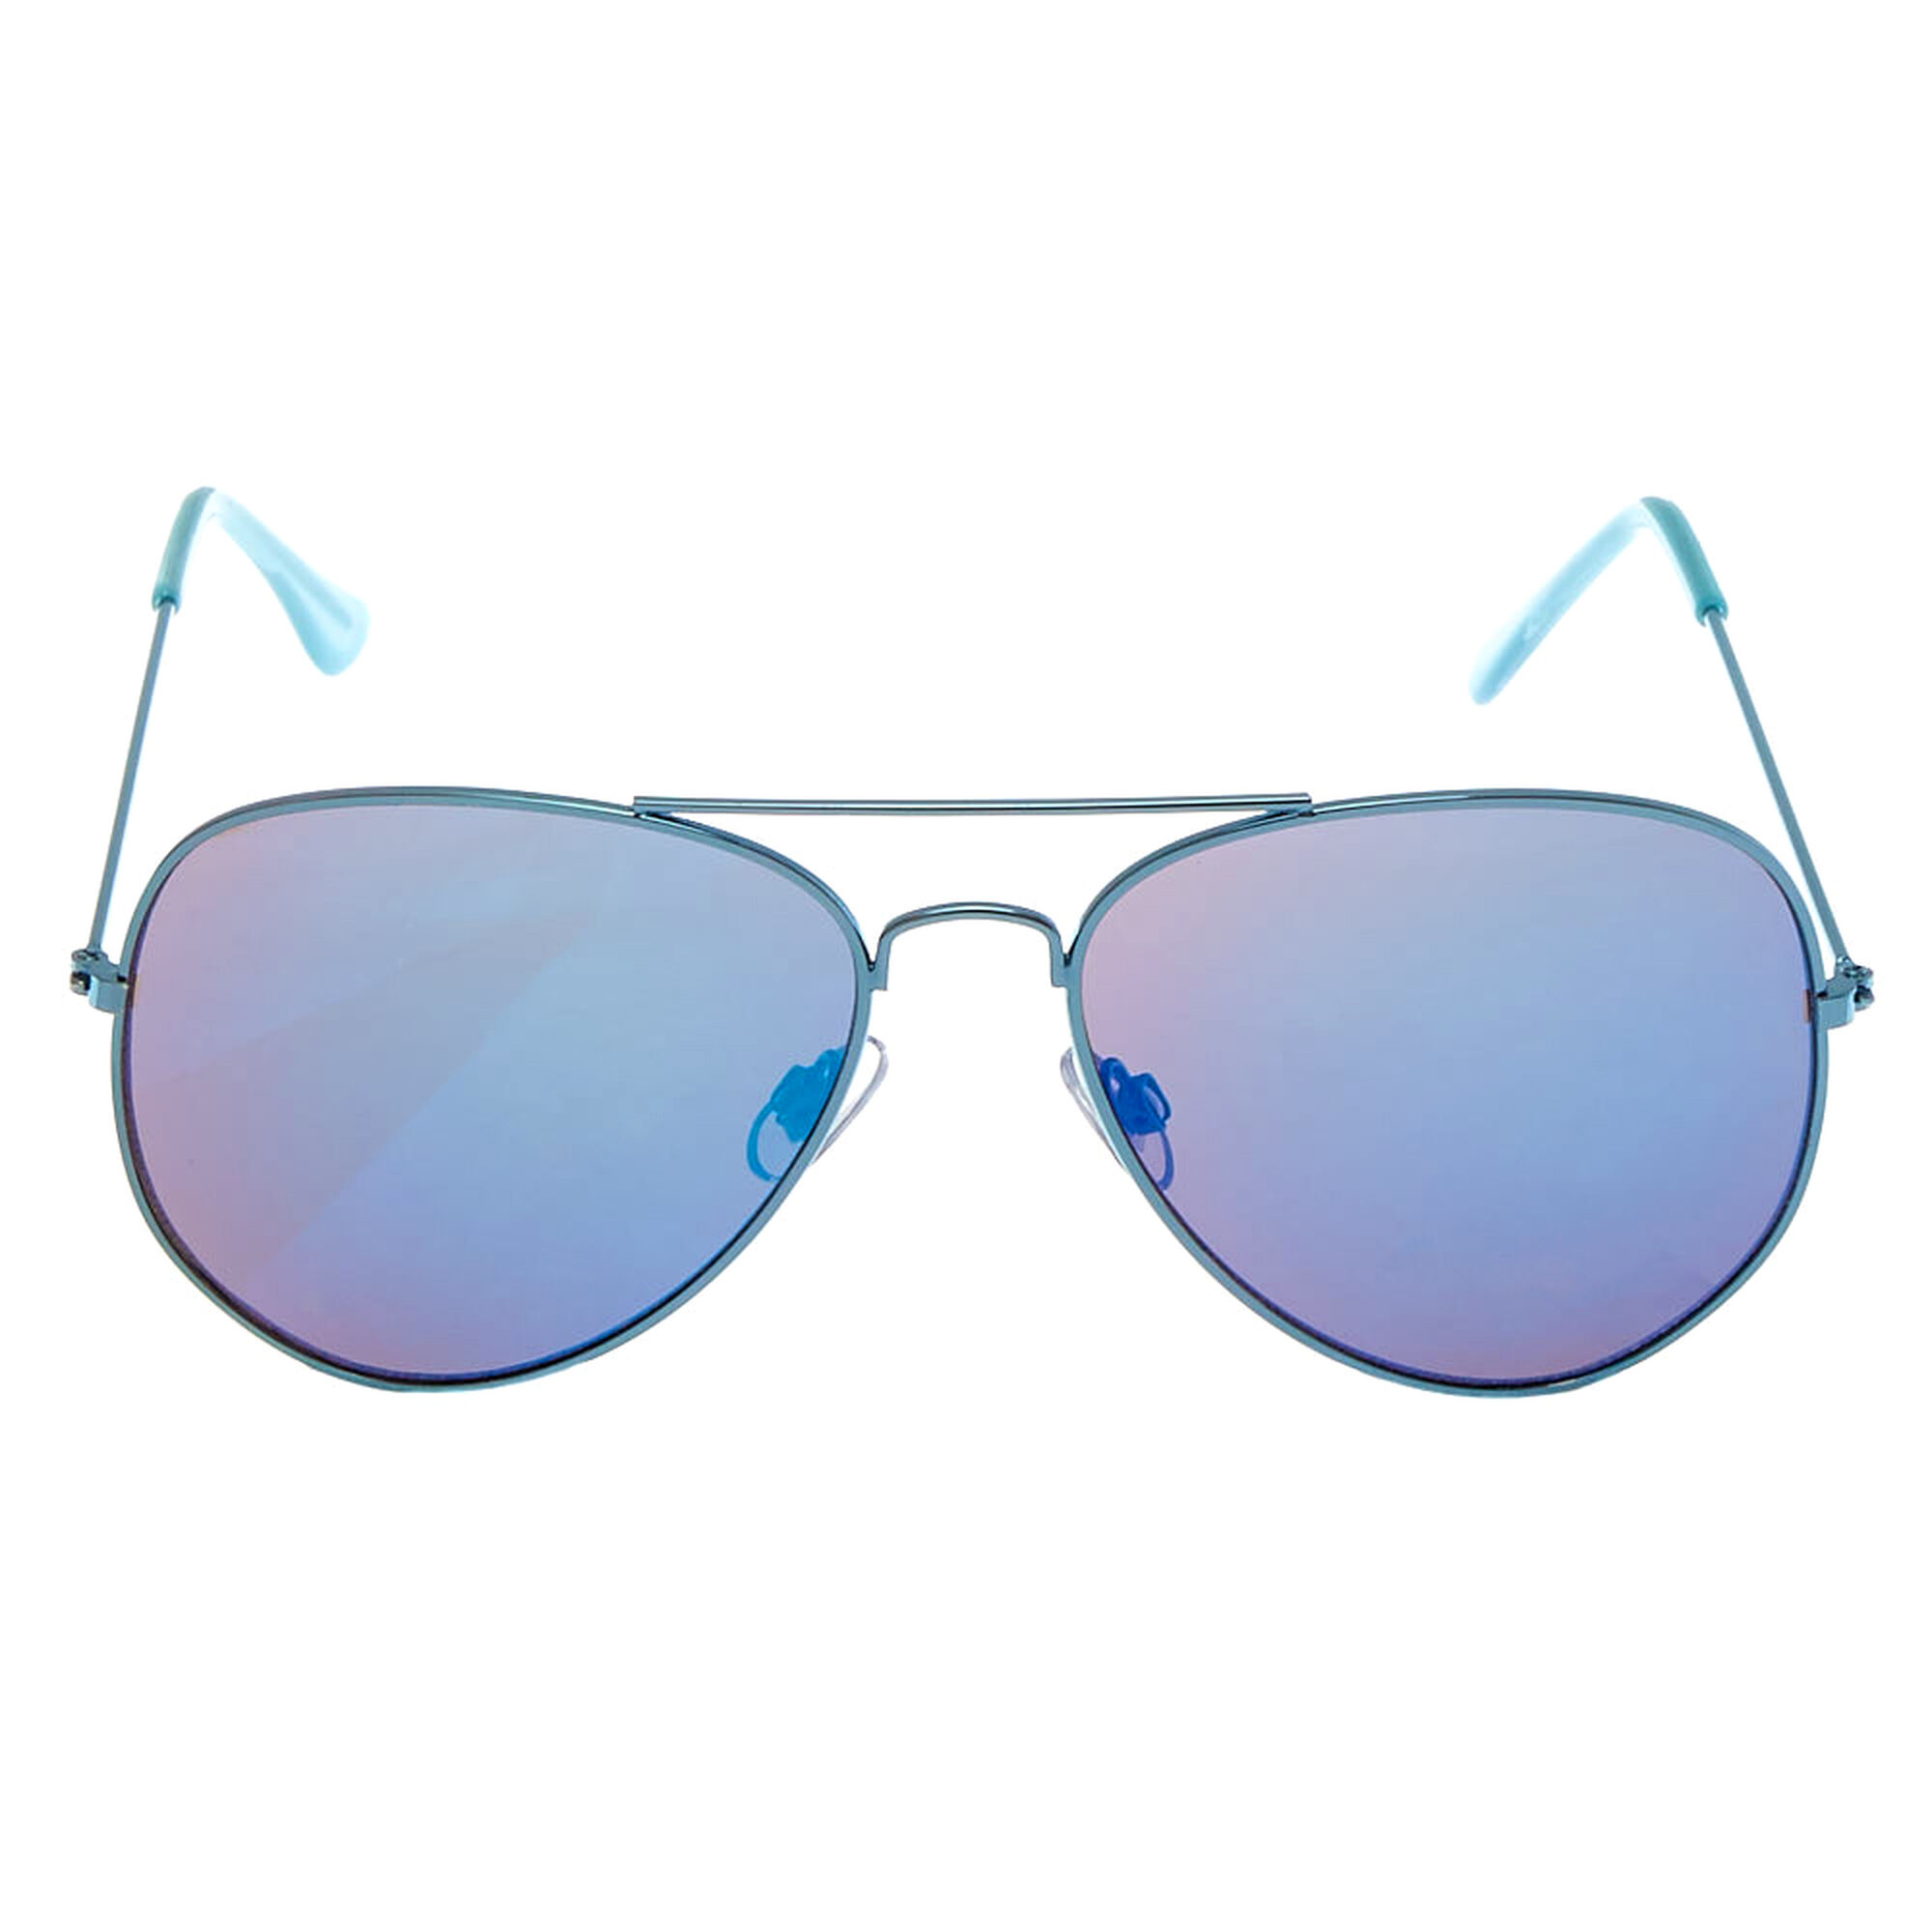 Blue Mirrored Aviator Sunglasses Claire S Us